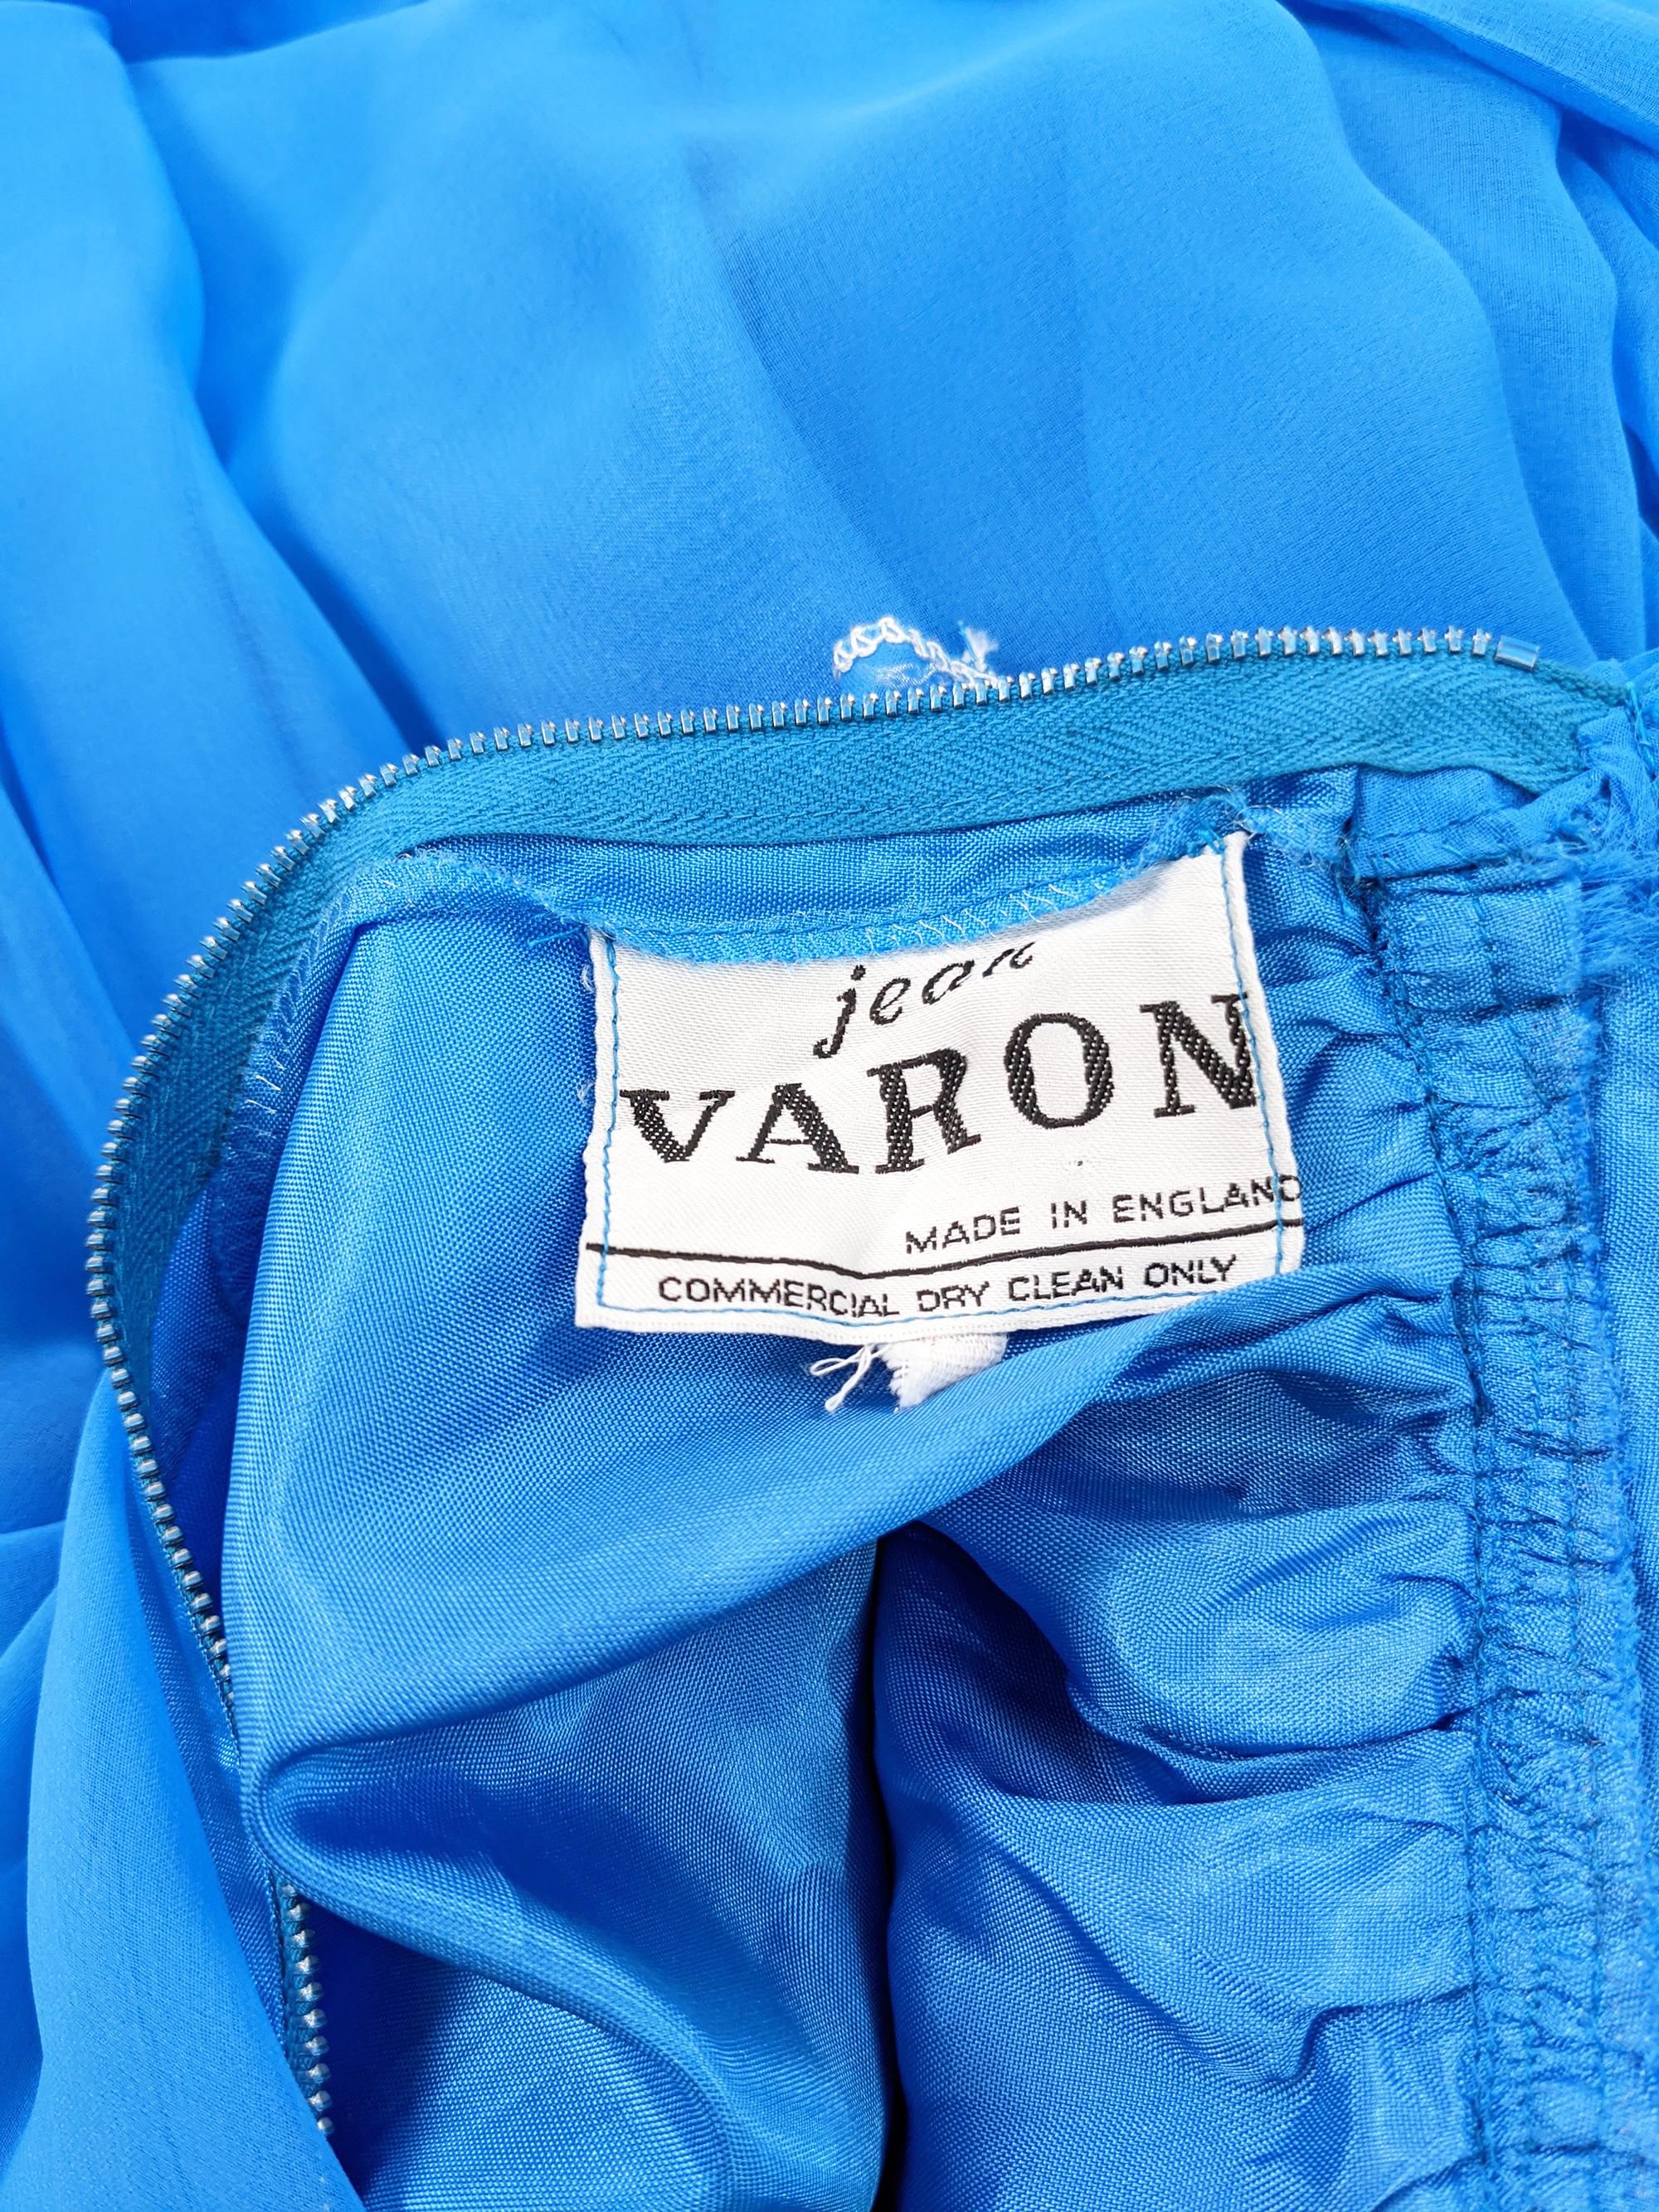 Jean Varon Vintage 1960s Blue Chiffon Maxi Evening Dress For Sale 6